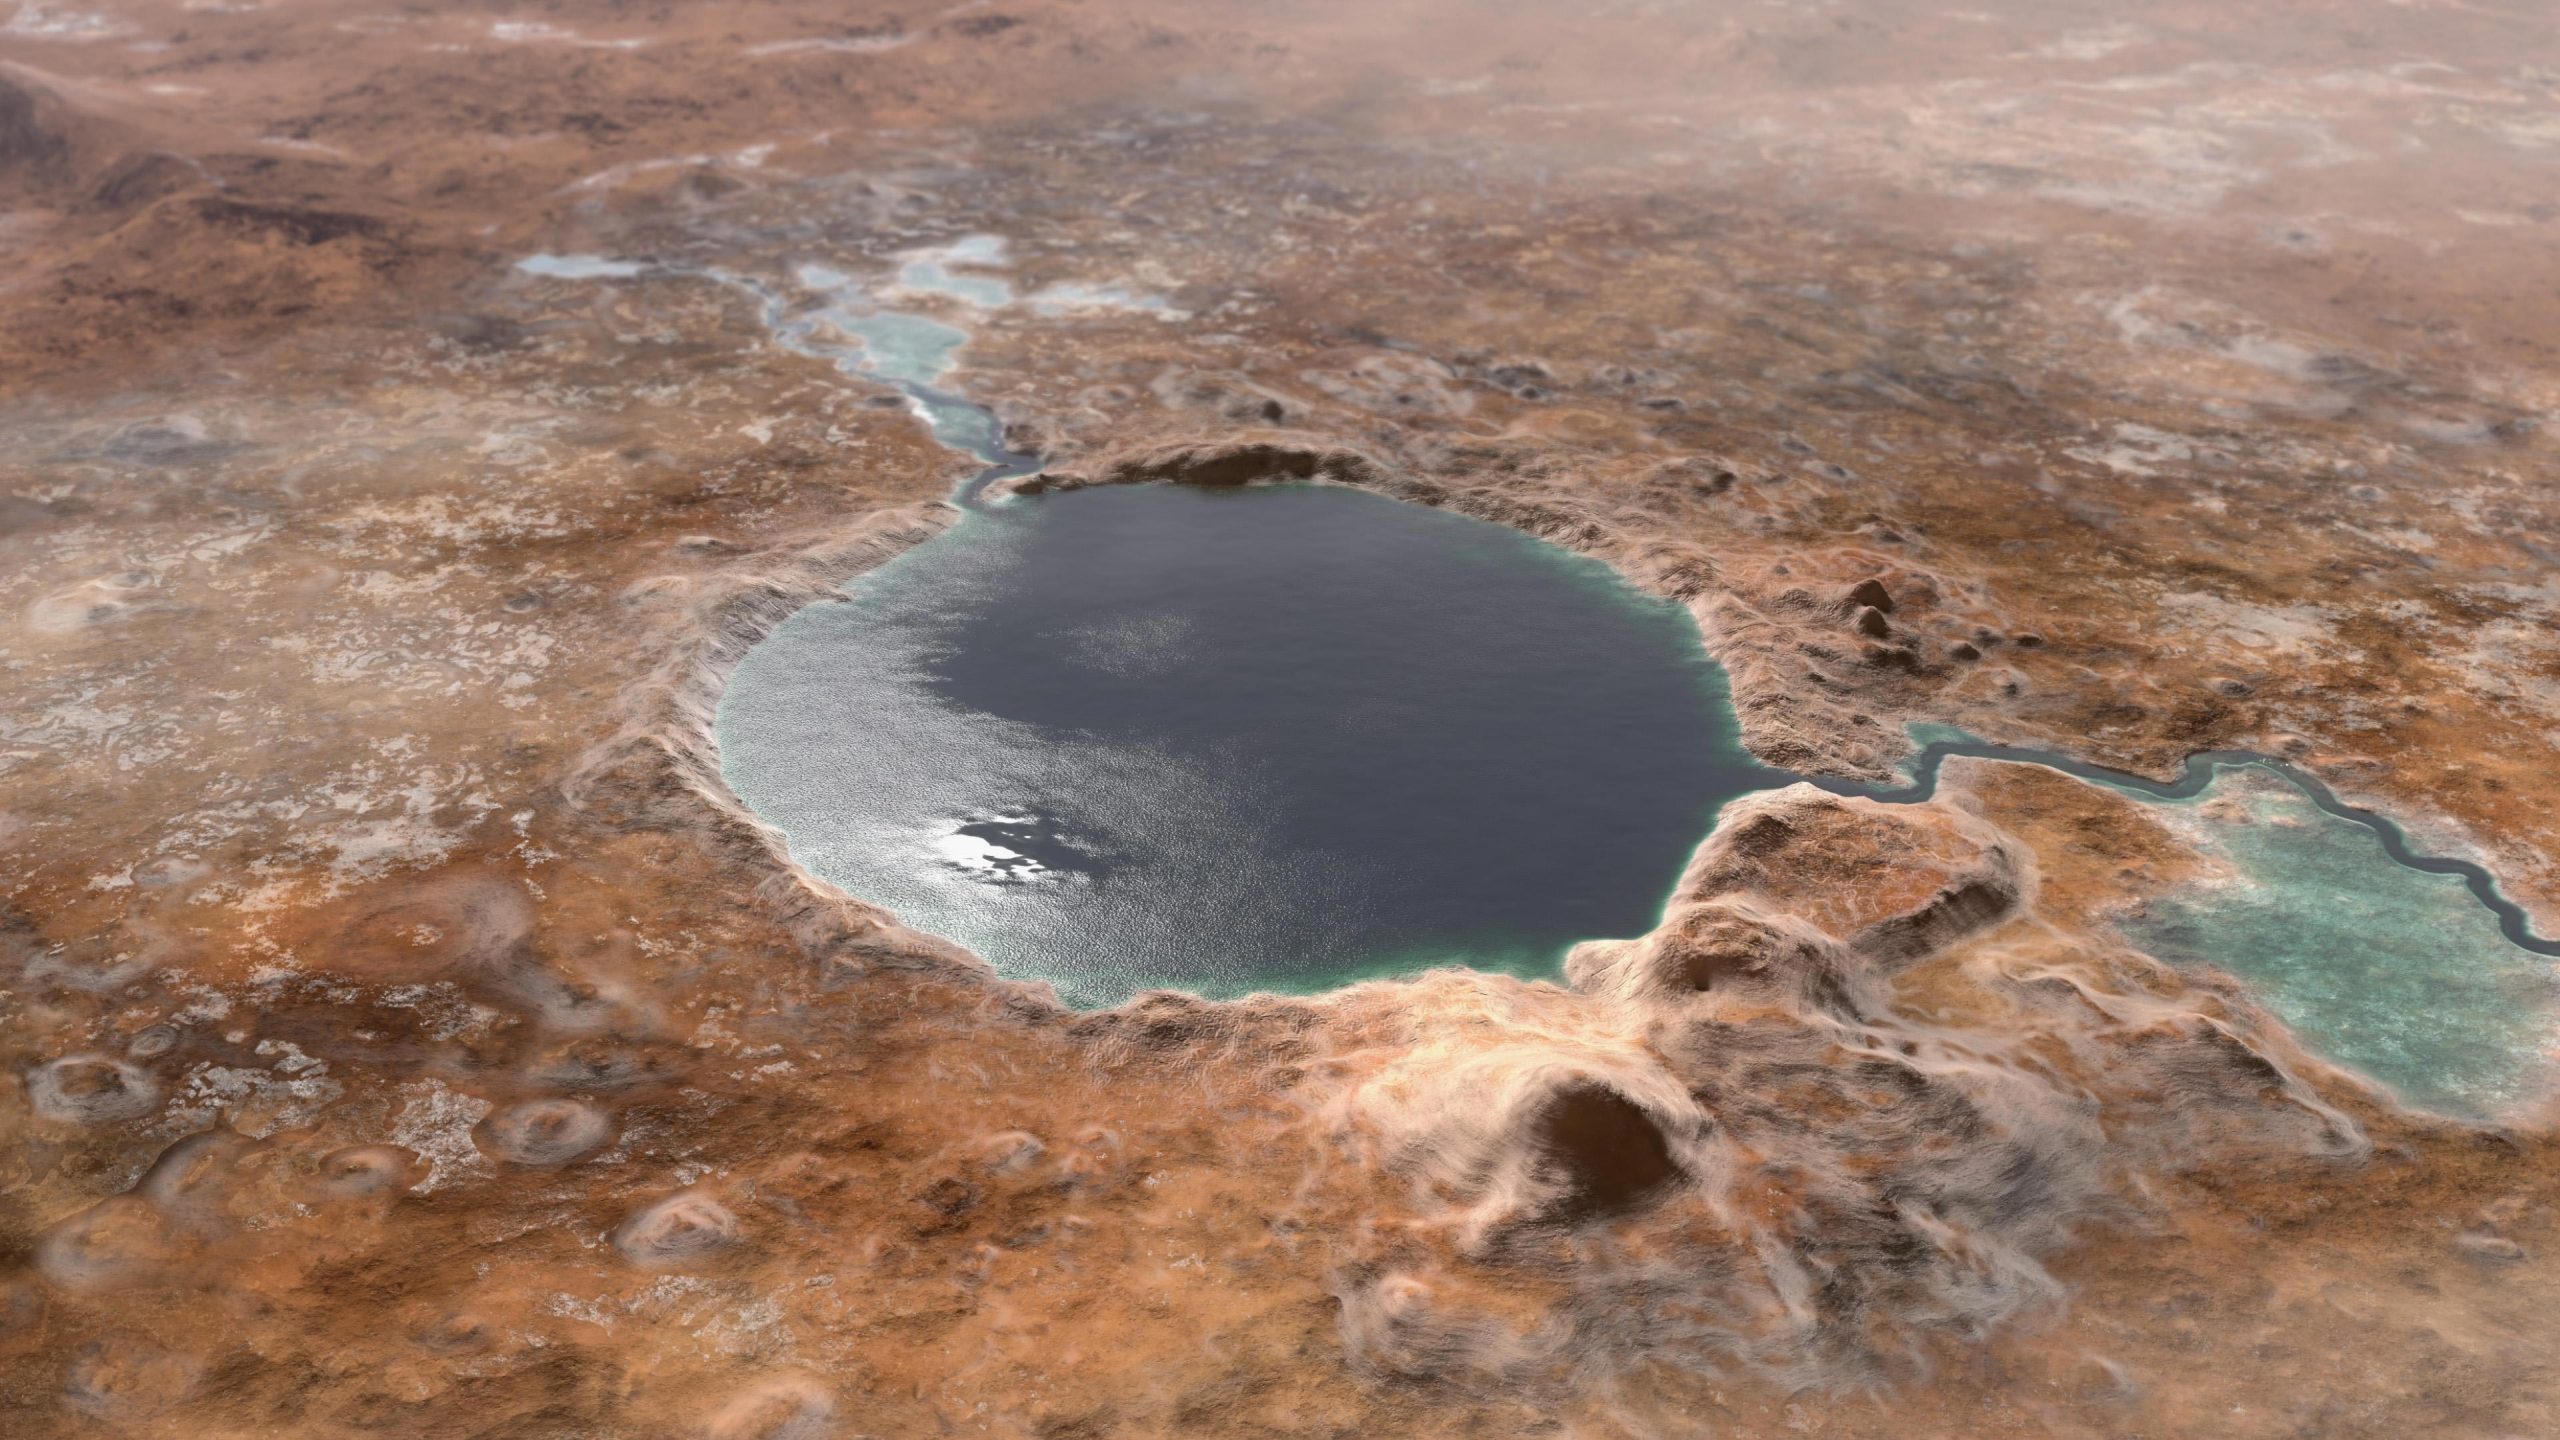  Jezero Crater  Landing Site of Mars Perseverance Rover 